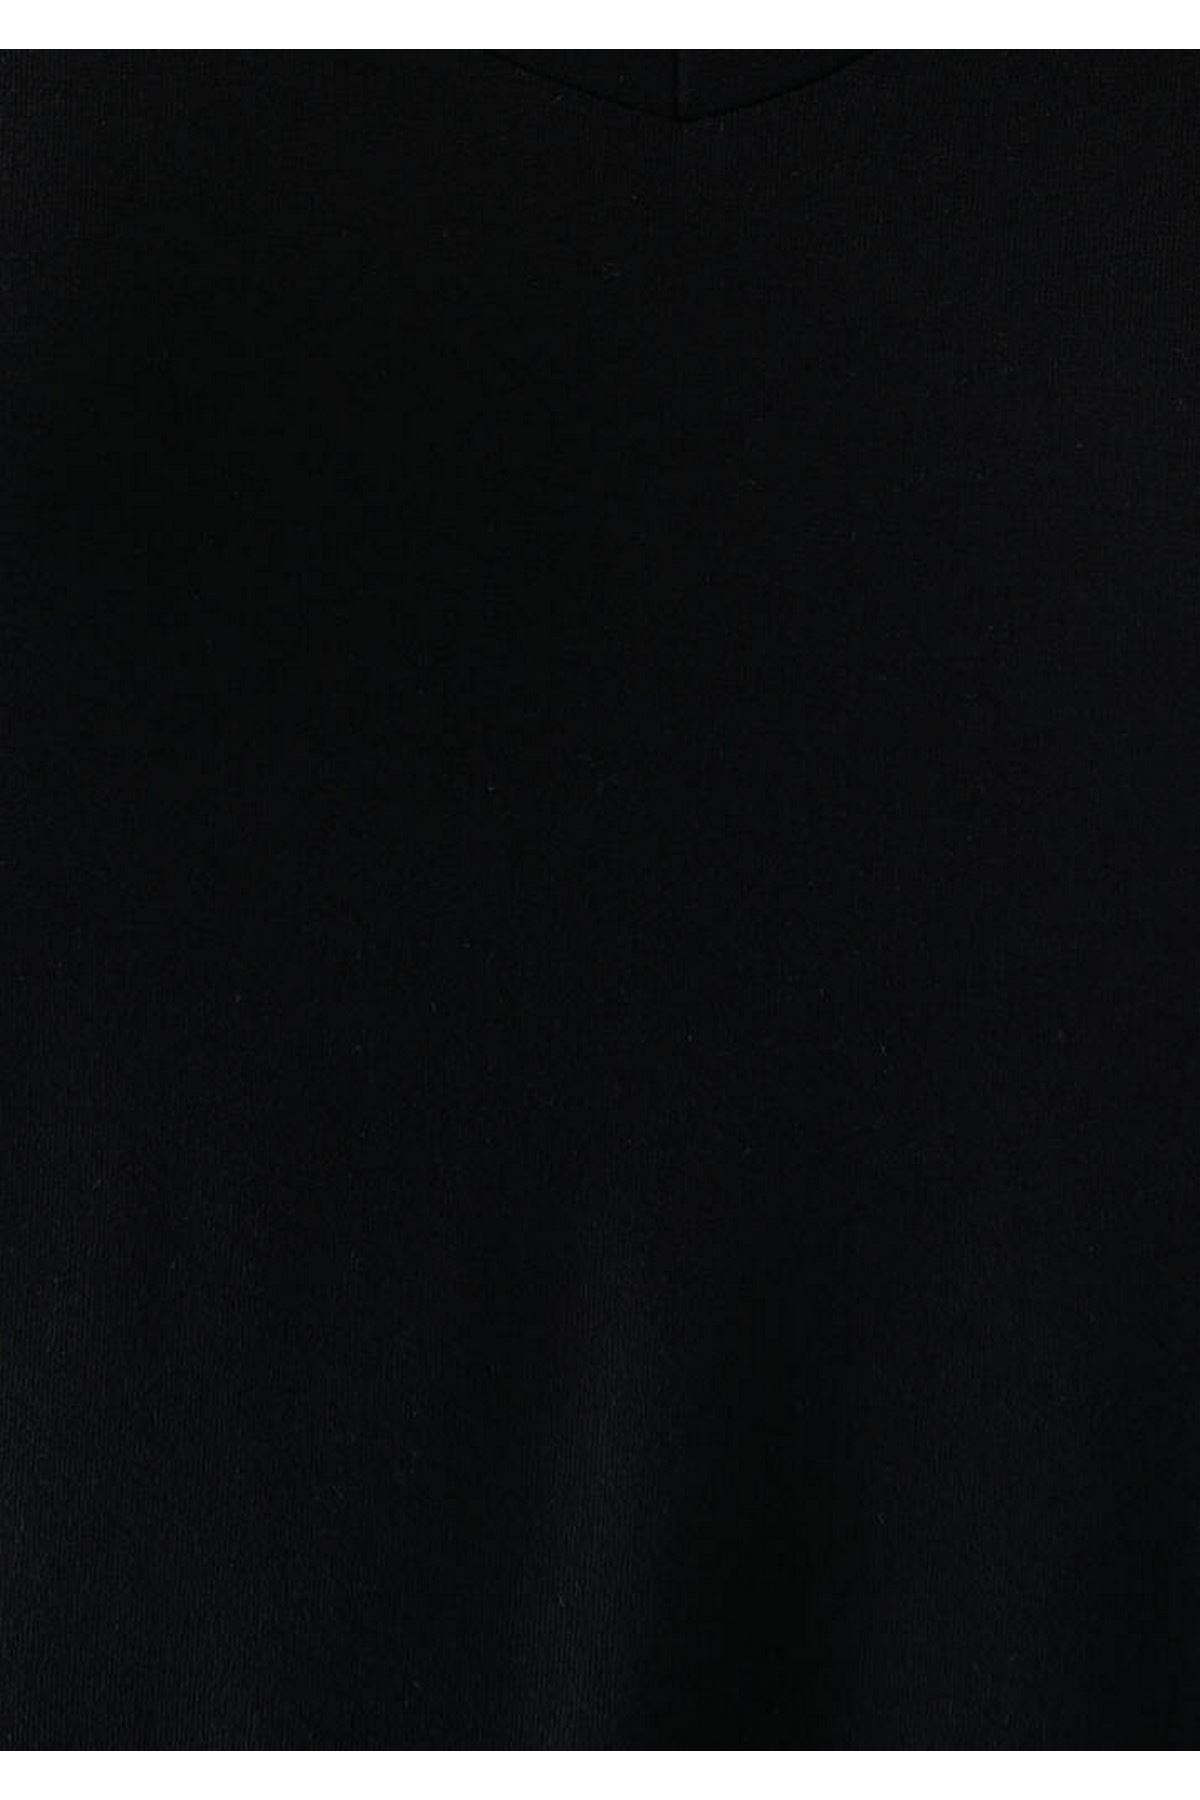 Basıc V Yaka Penye Kadın Siyah Tişört - M167714-900